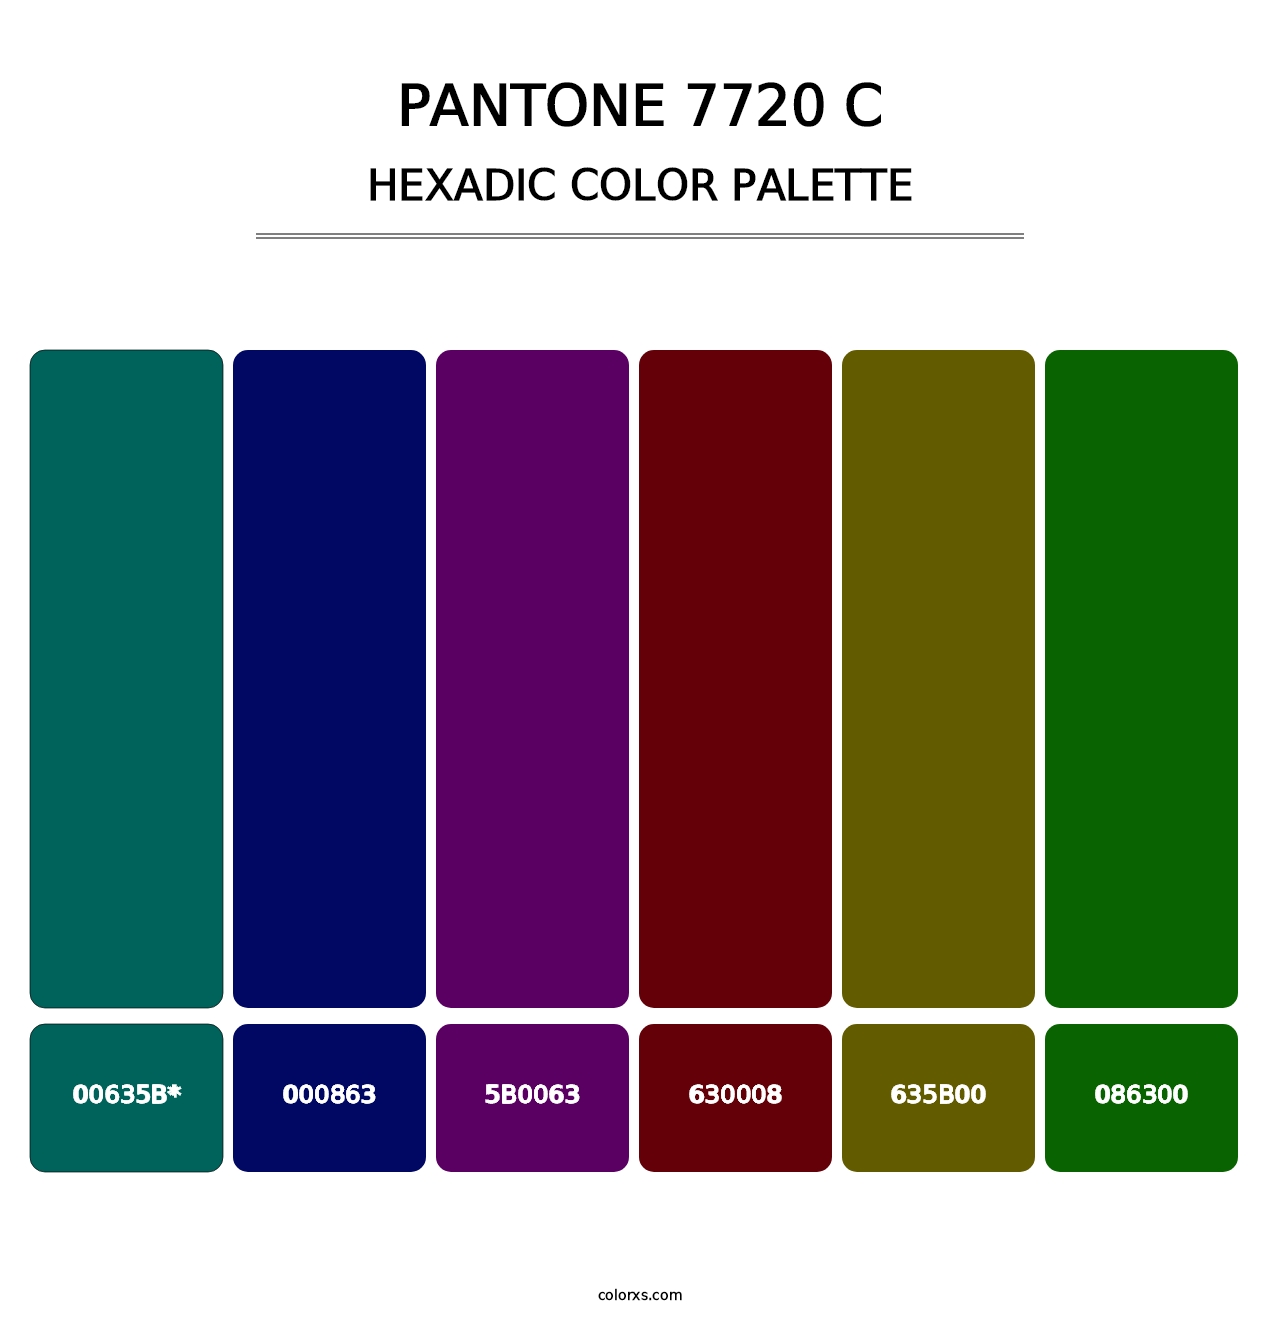 PANTONE 7720 C - Hexadic Color Palette